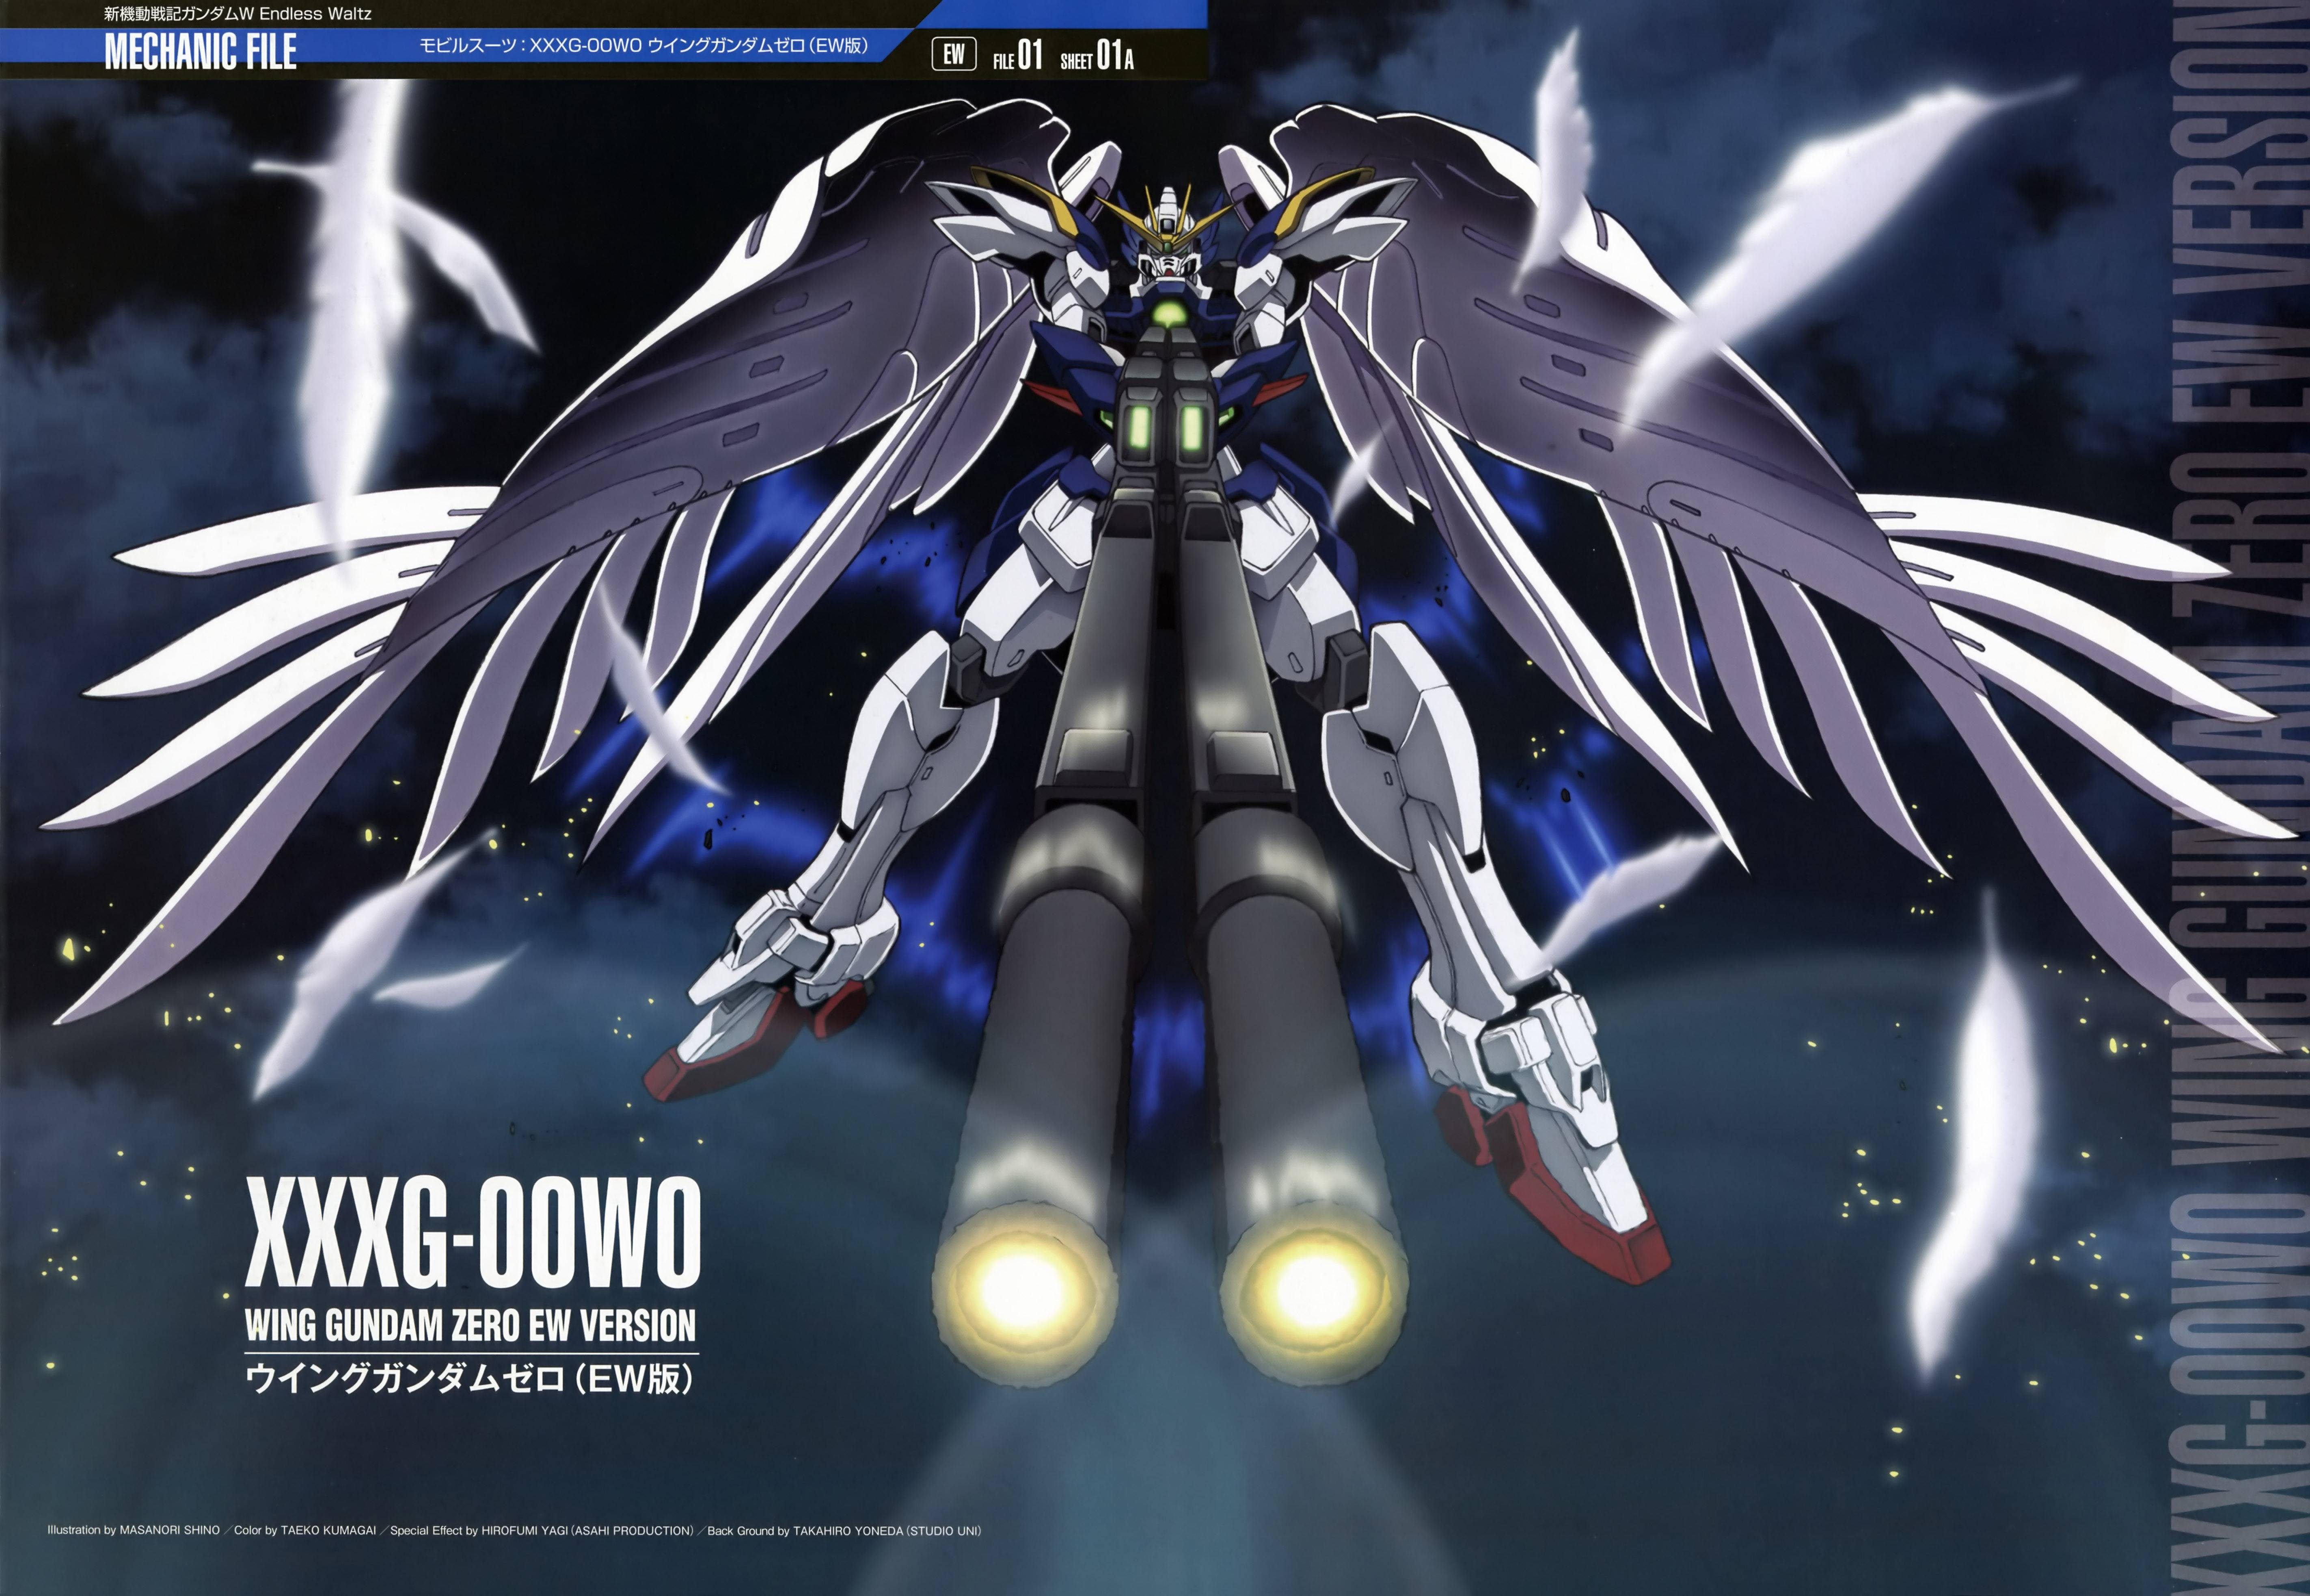 Anime Gundam Mechs Super Robot Wars Mobile Suit Gundam Wing Wing Gundam Zero Artwork Digital Art Off 5690x3932